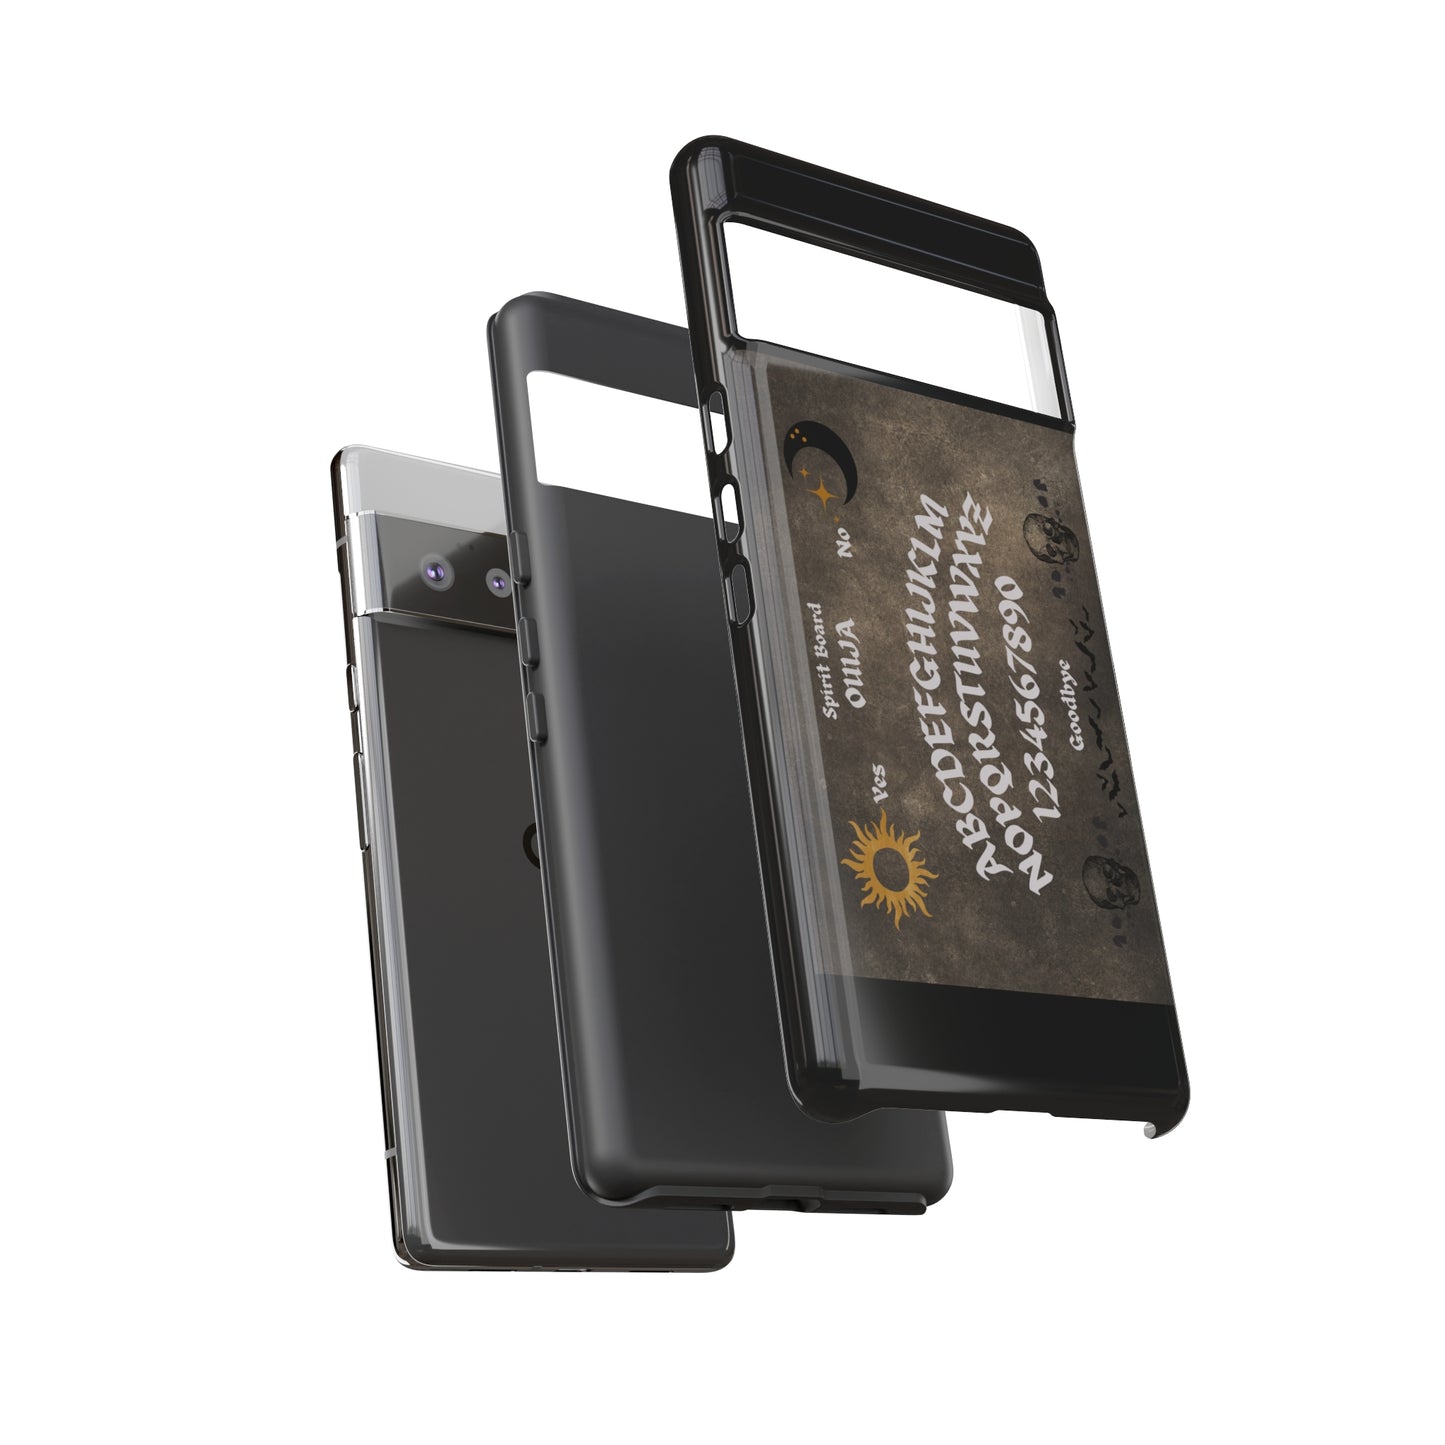 Spirit Ouija Board Tough Case for Samsung iPhone GooglePhone CaseVTZdesignsiPhone 12 MiniMatteAccessoriesboardGlossy